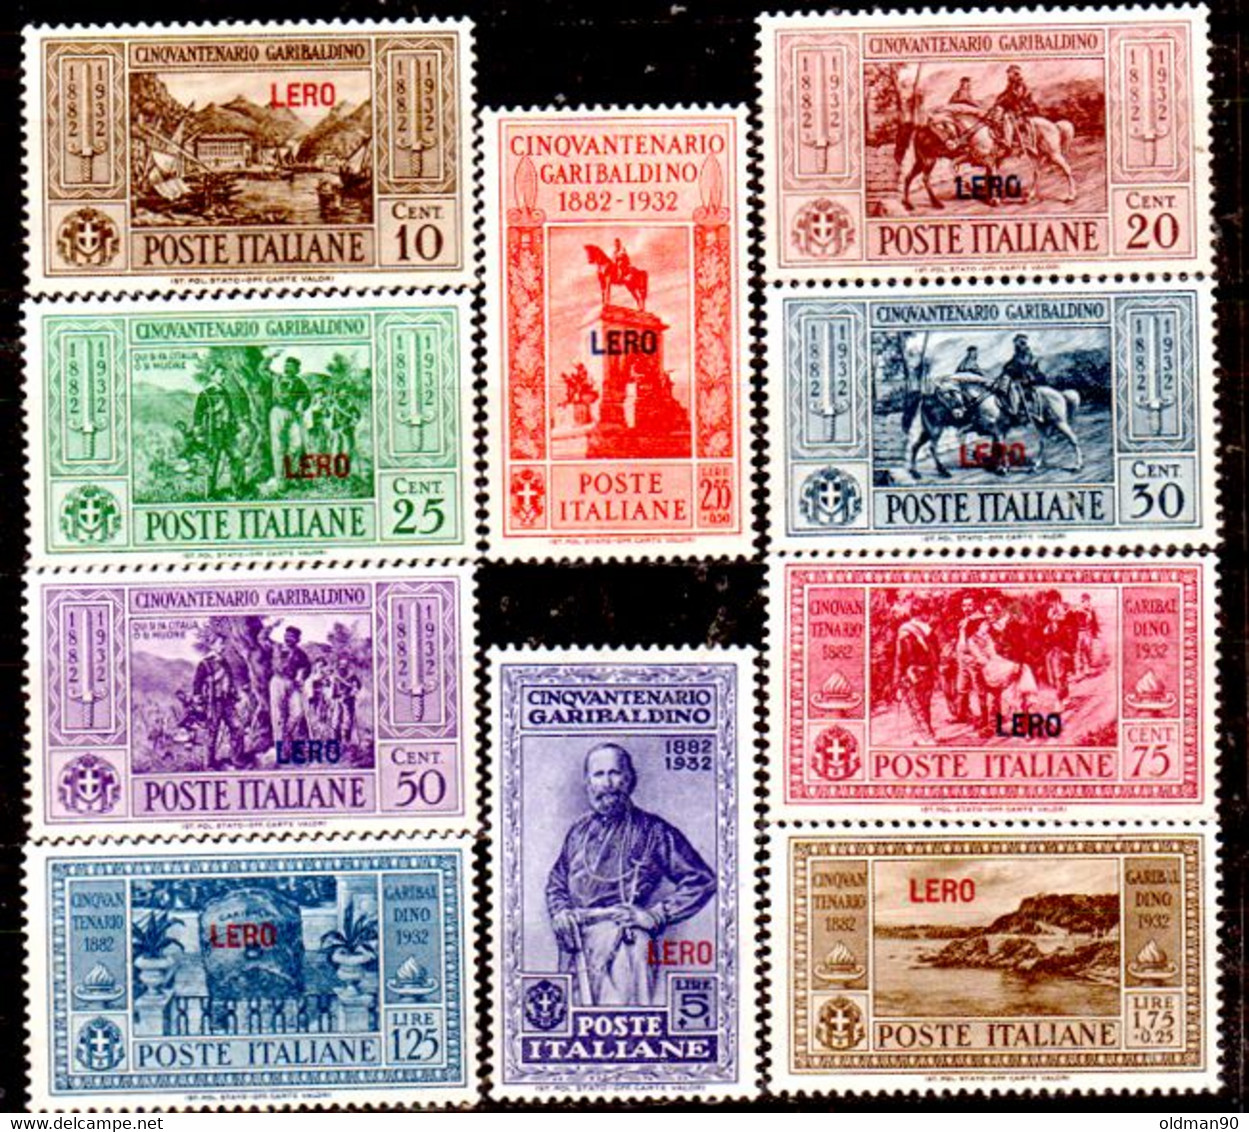 Egeo-OS-295- Lero: Original Stamp And Overprint 1932 (++) MNH - Quality In Your Opinion. - Ägäis (Lero)